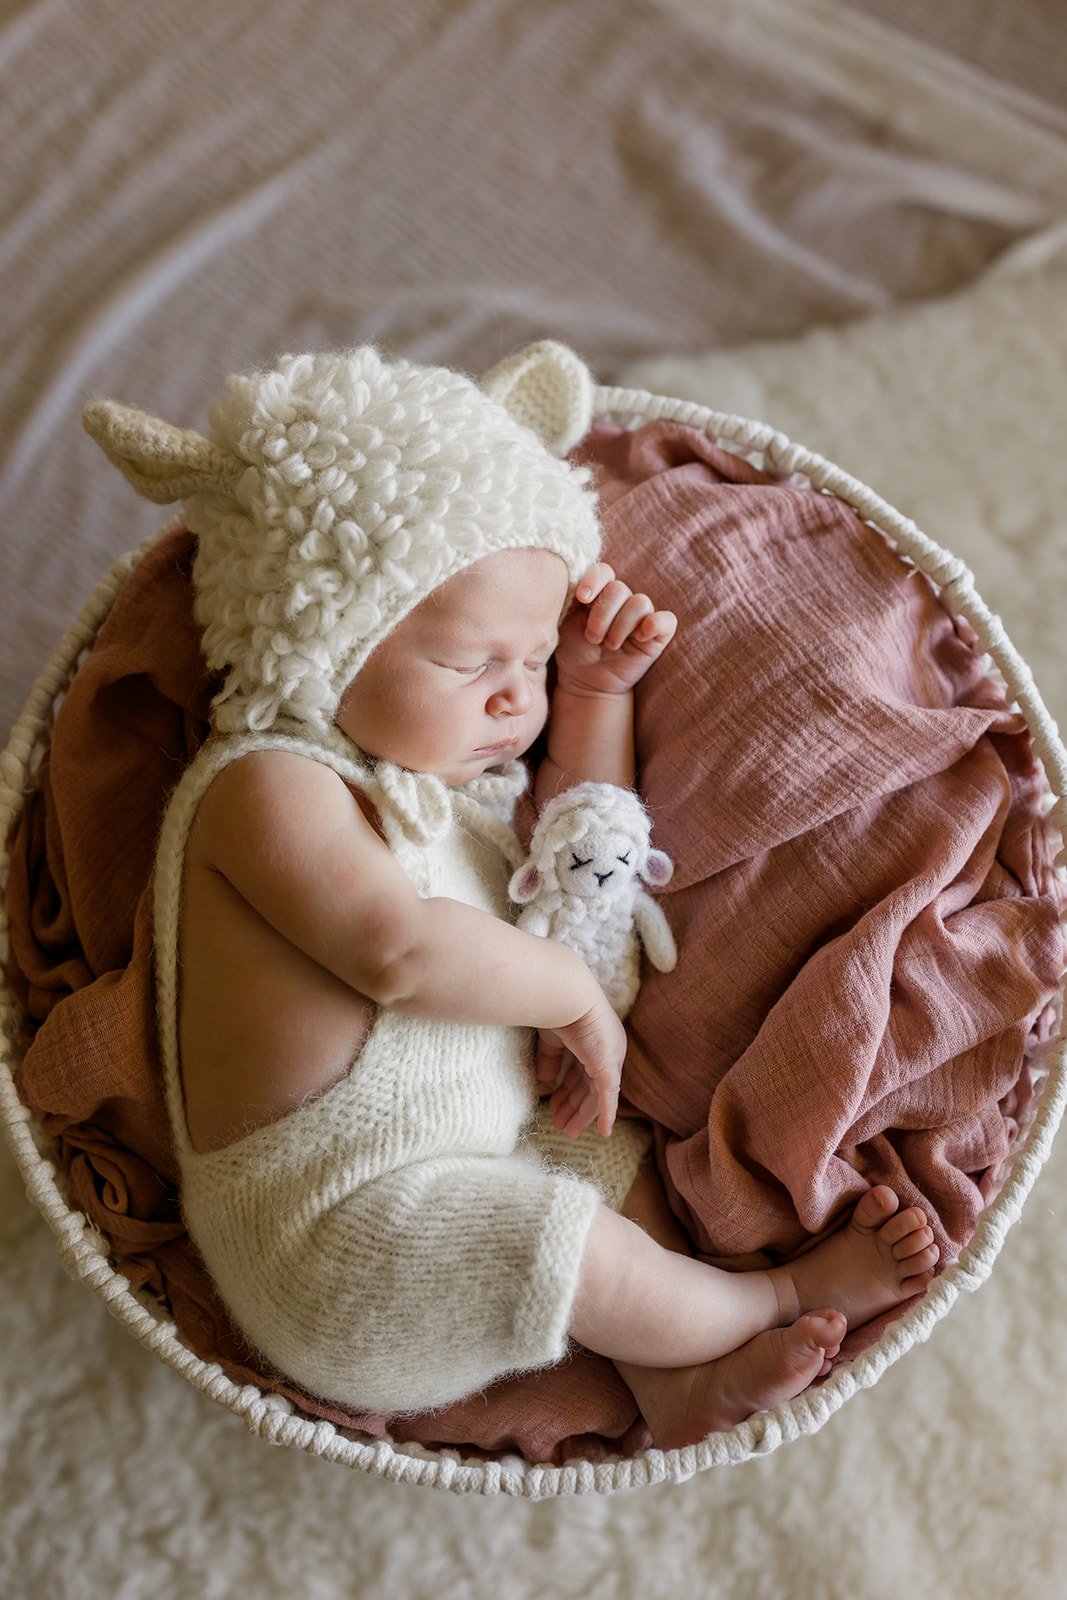 houston-newborn-photographer-kimberly-brooke-lifestlye-baby-337.jpg